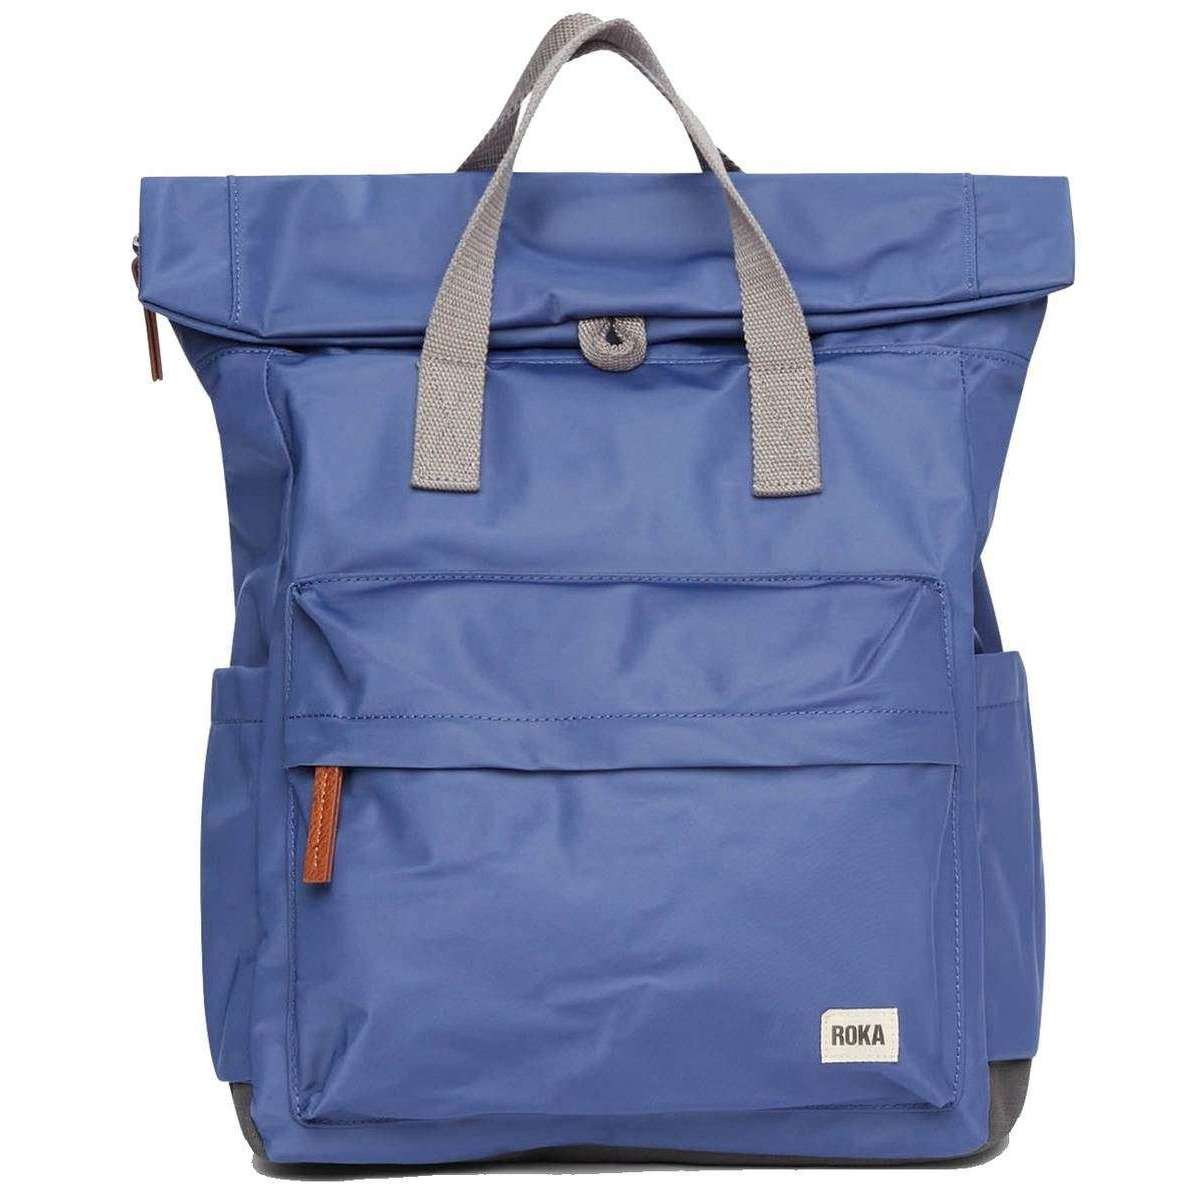 Roka Canfield B Medium Sustainable Nylon Backpack - Burnt Blue